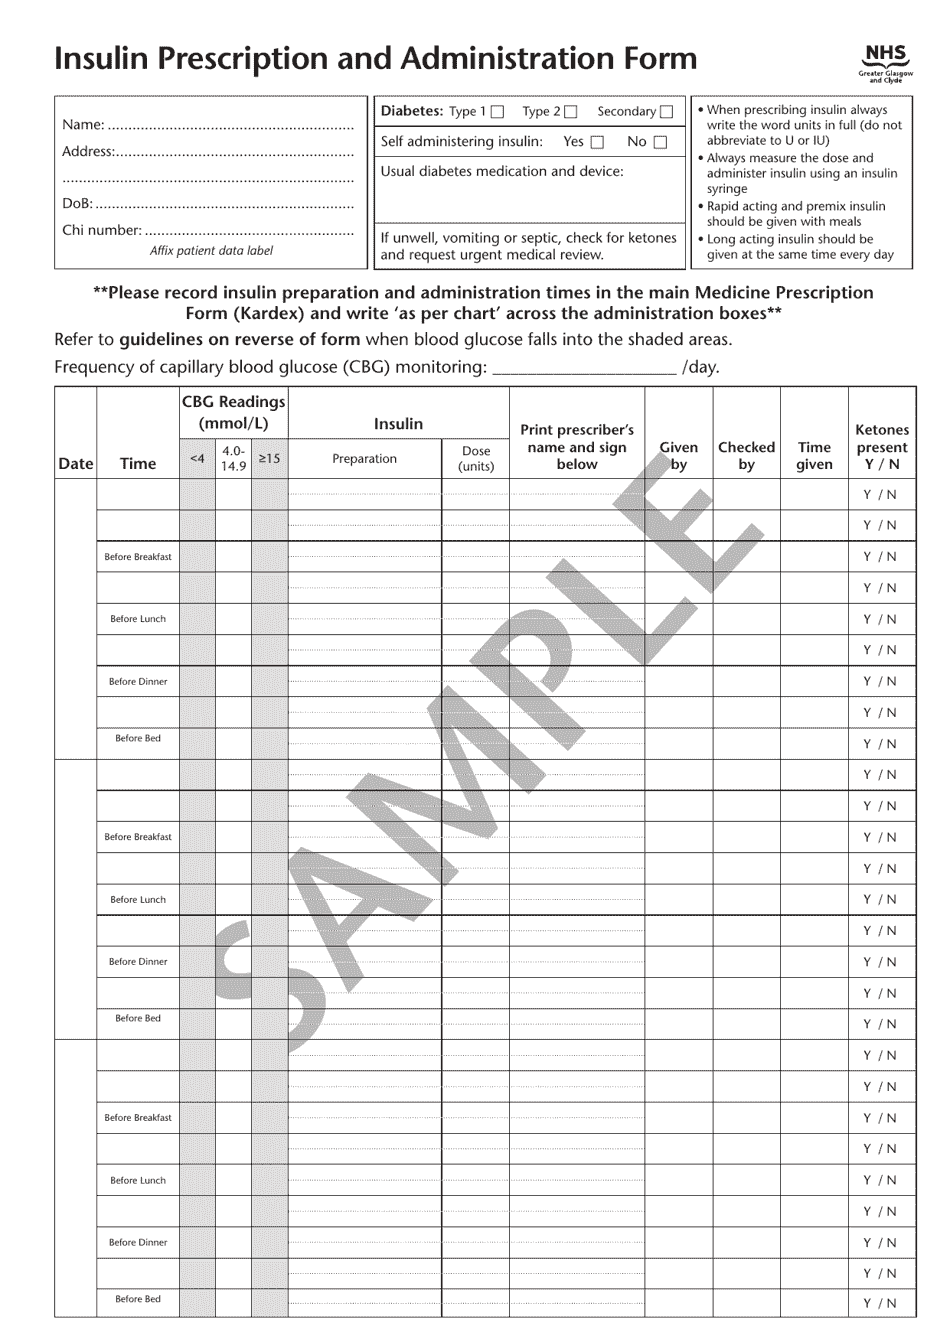 Insulin Prescription and Administration Form, Page 1